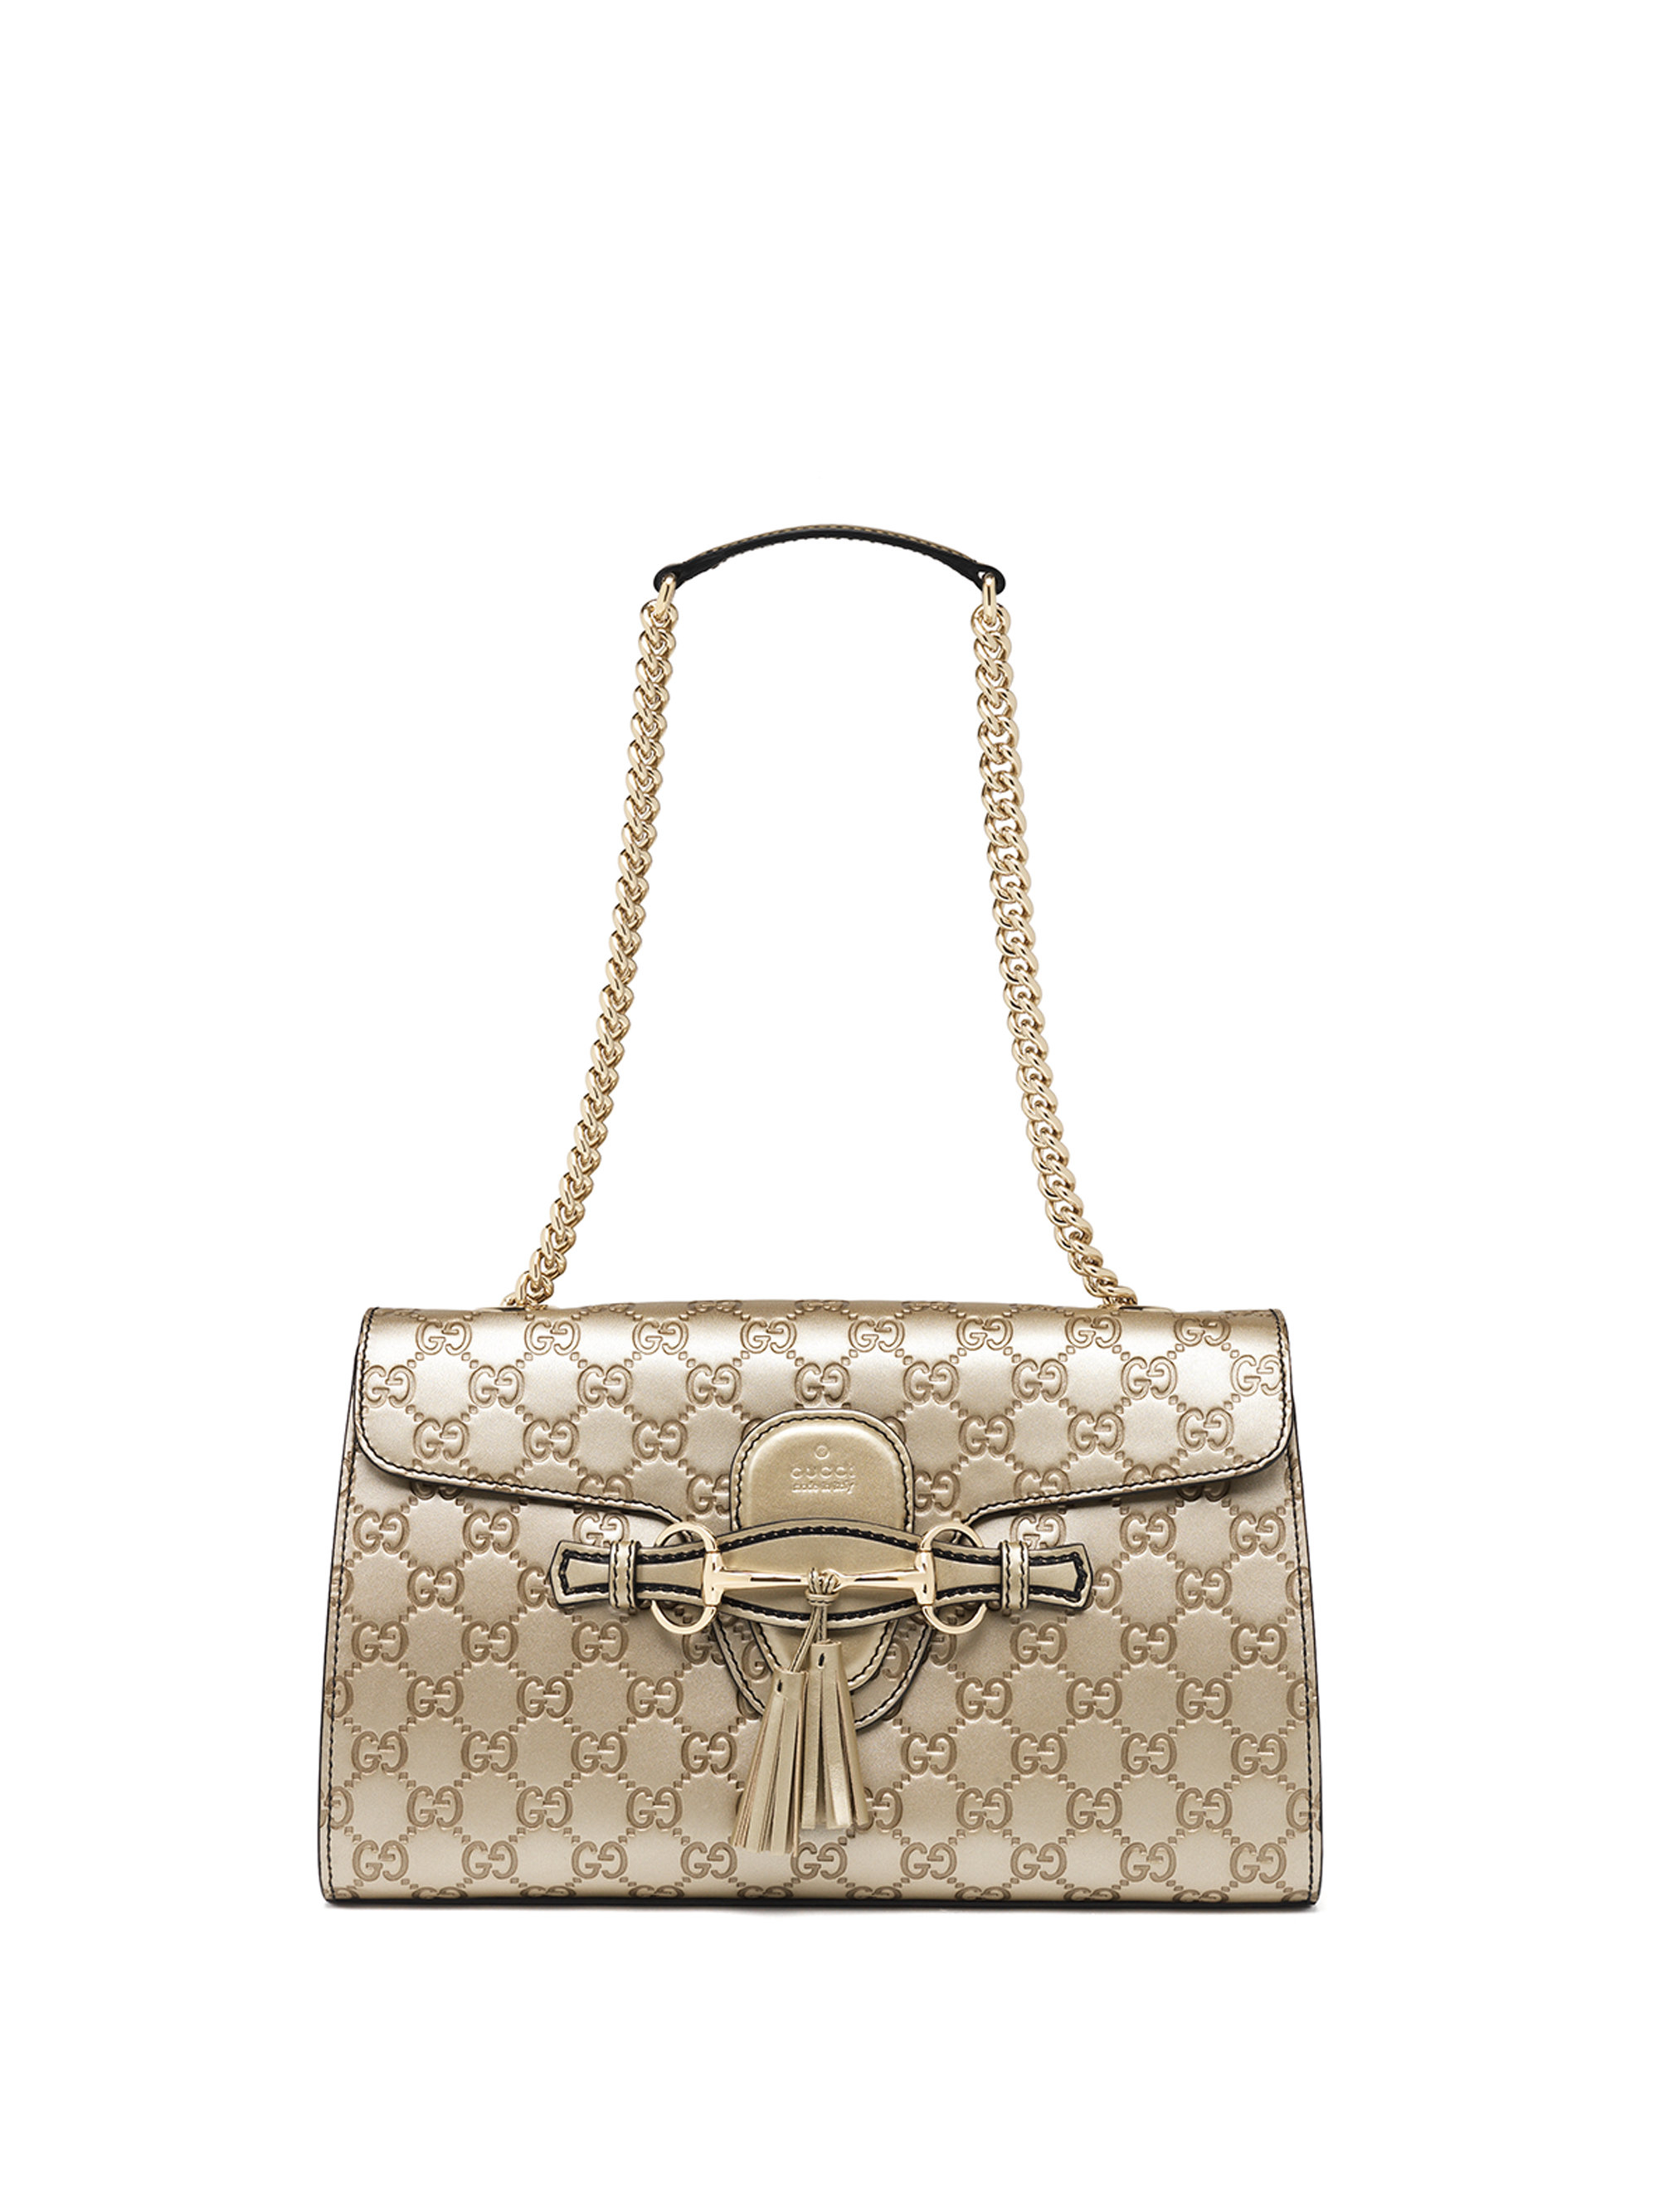 Lyst - Gucci Emily Medium Metallic Ssima Leather Chain Shoulder Bag in Metallic